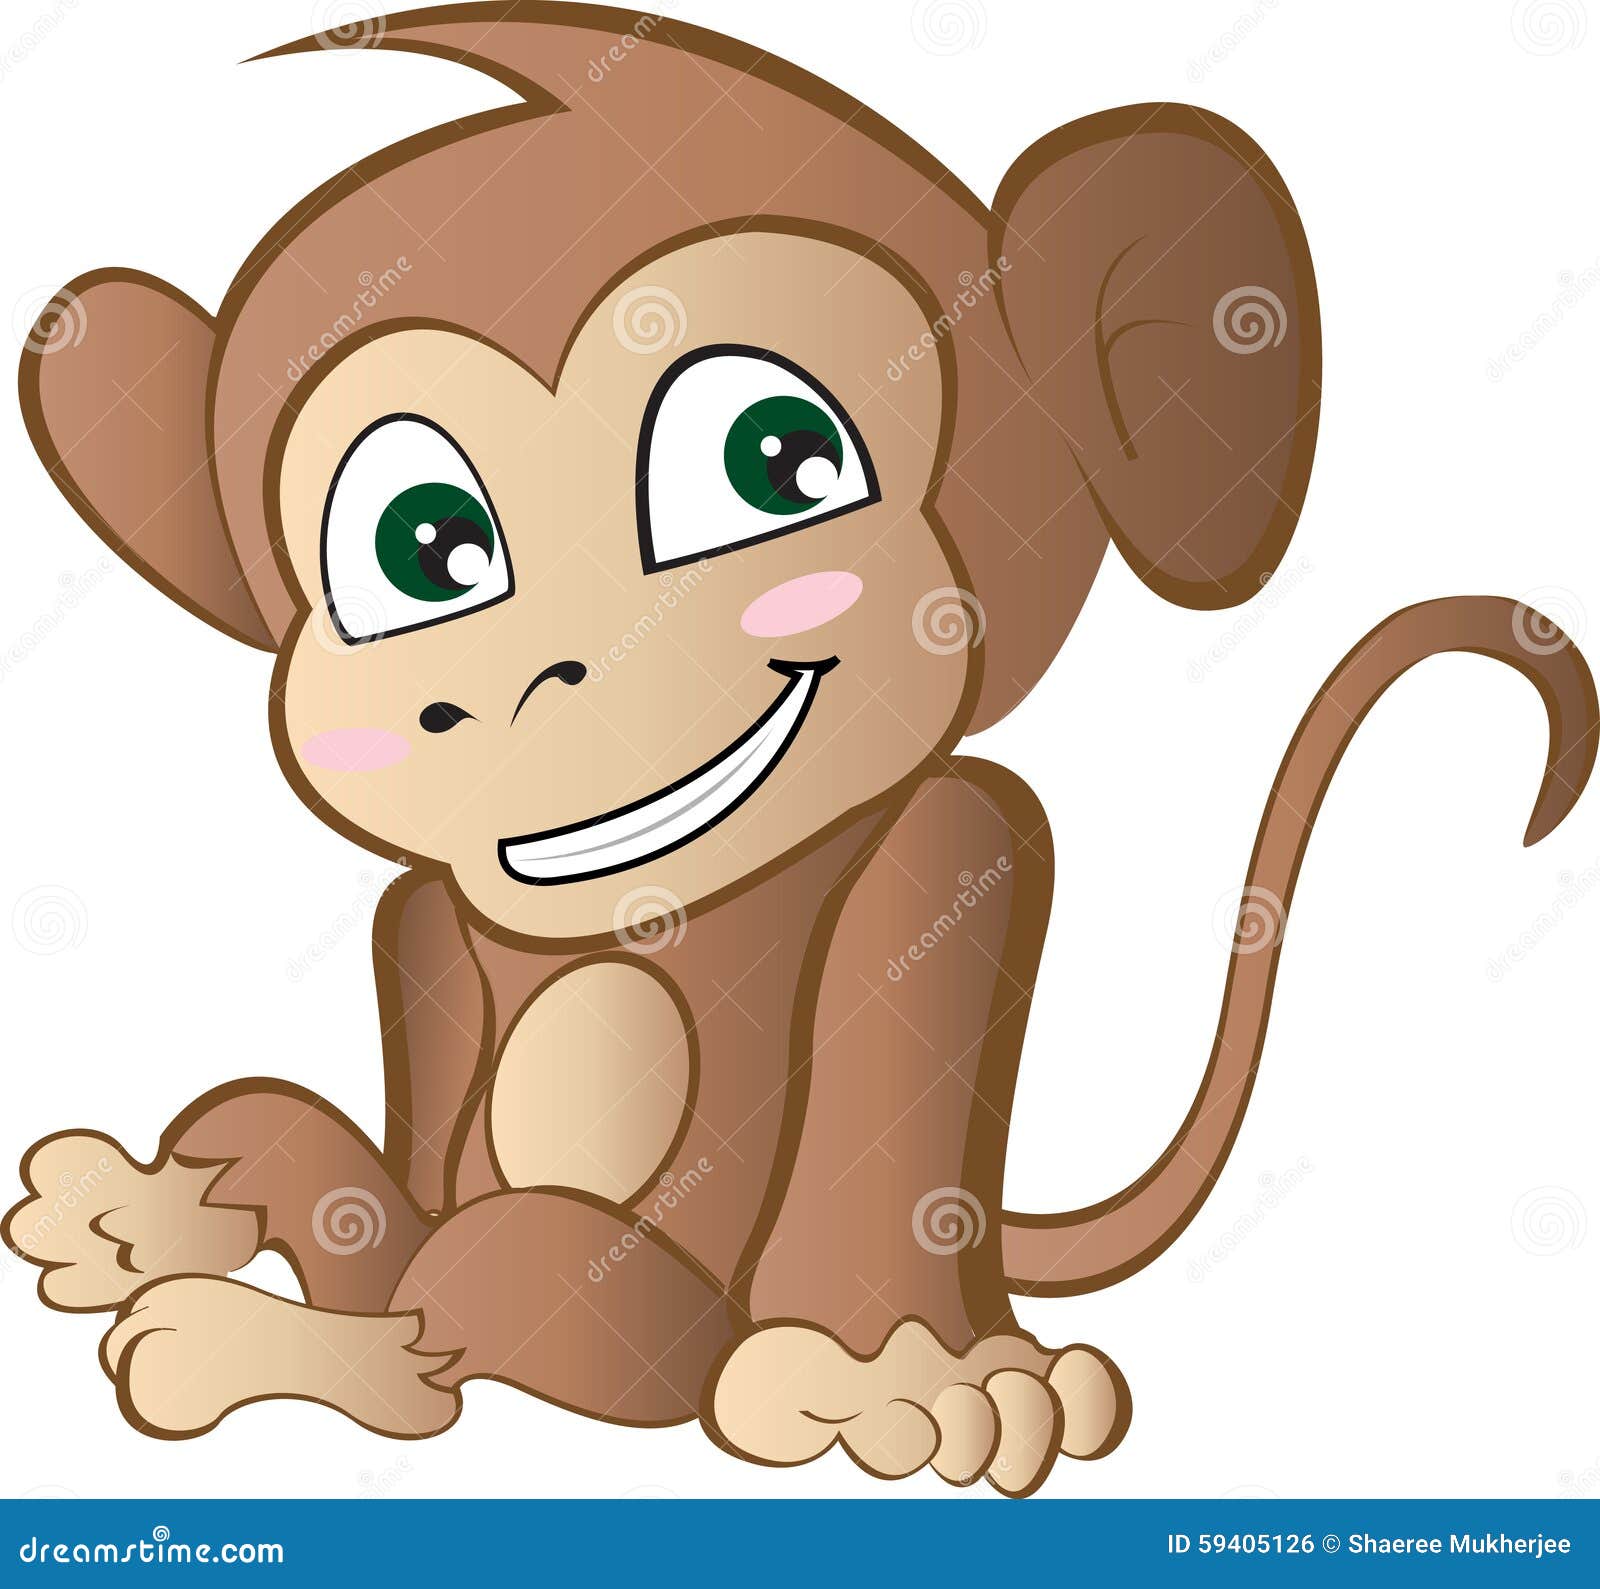 Cute cartoon monkey stock vector. Illustration of smiling - 59405126